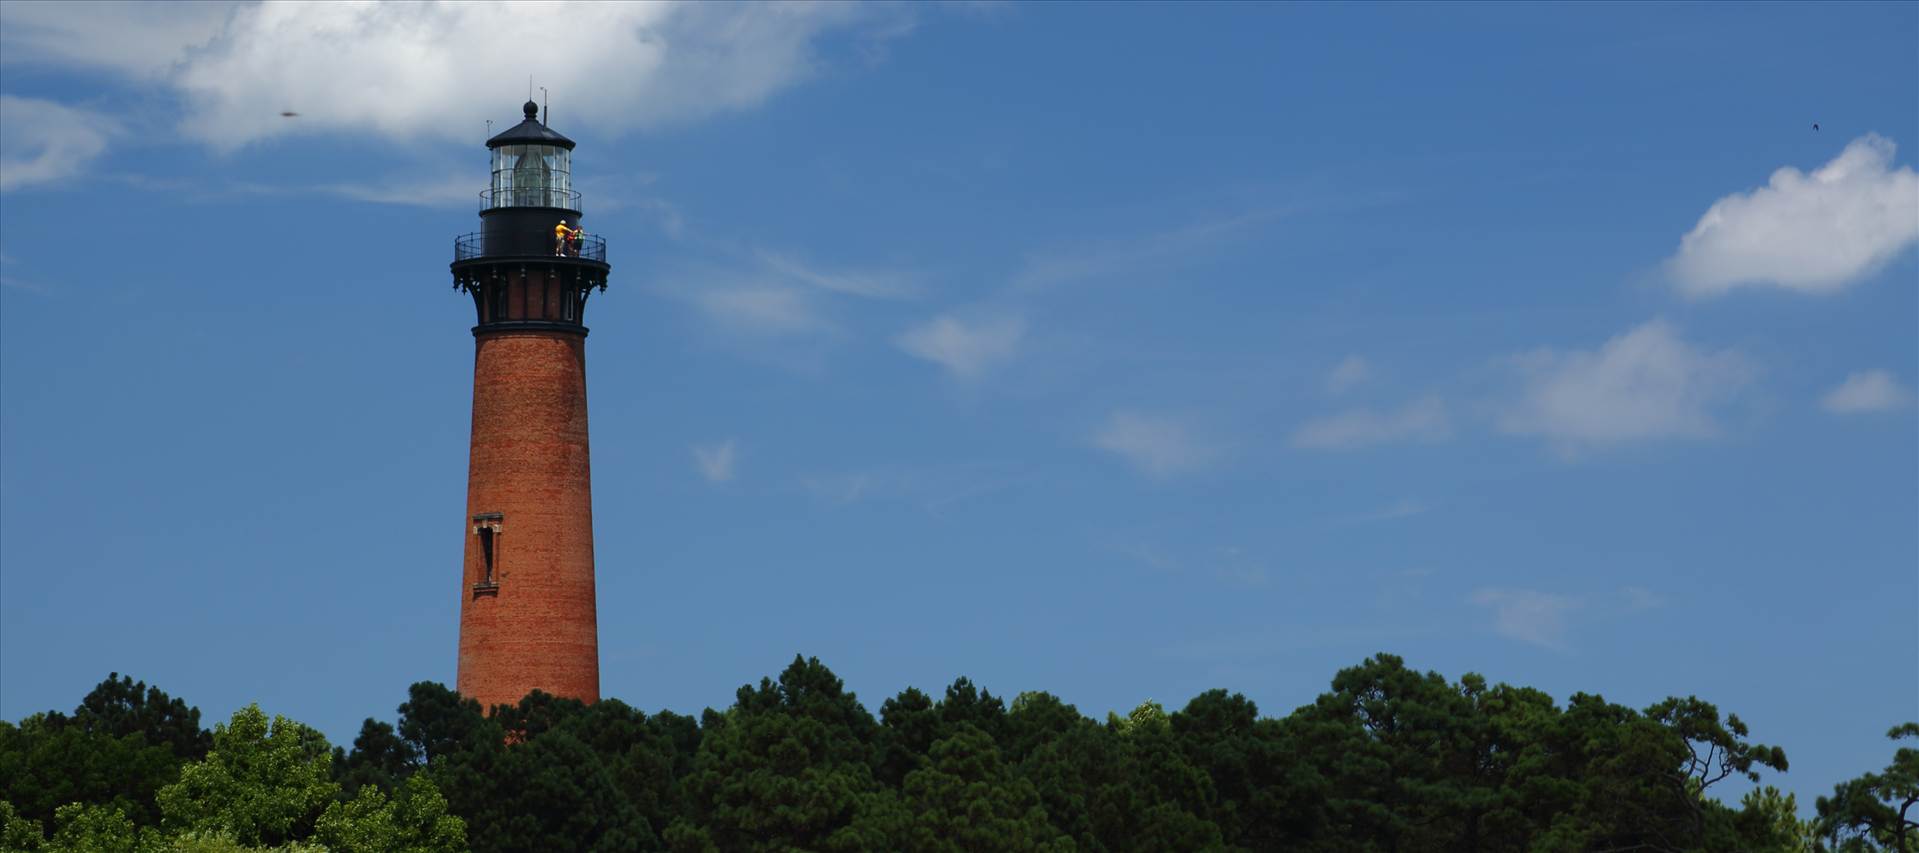 Currituck Lighthouse From Afar Currituck, North Carolina Lighthouse by Scott Smith Photos